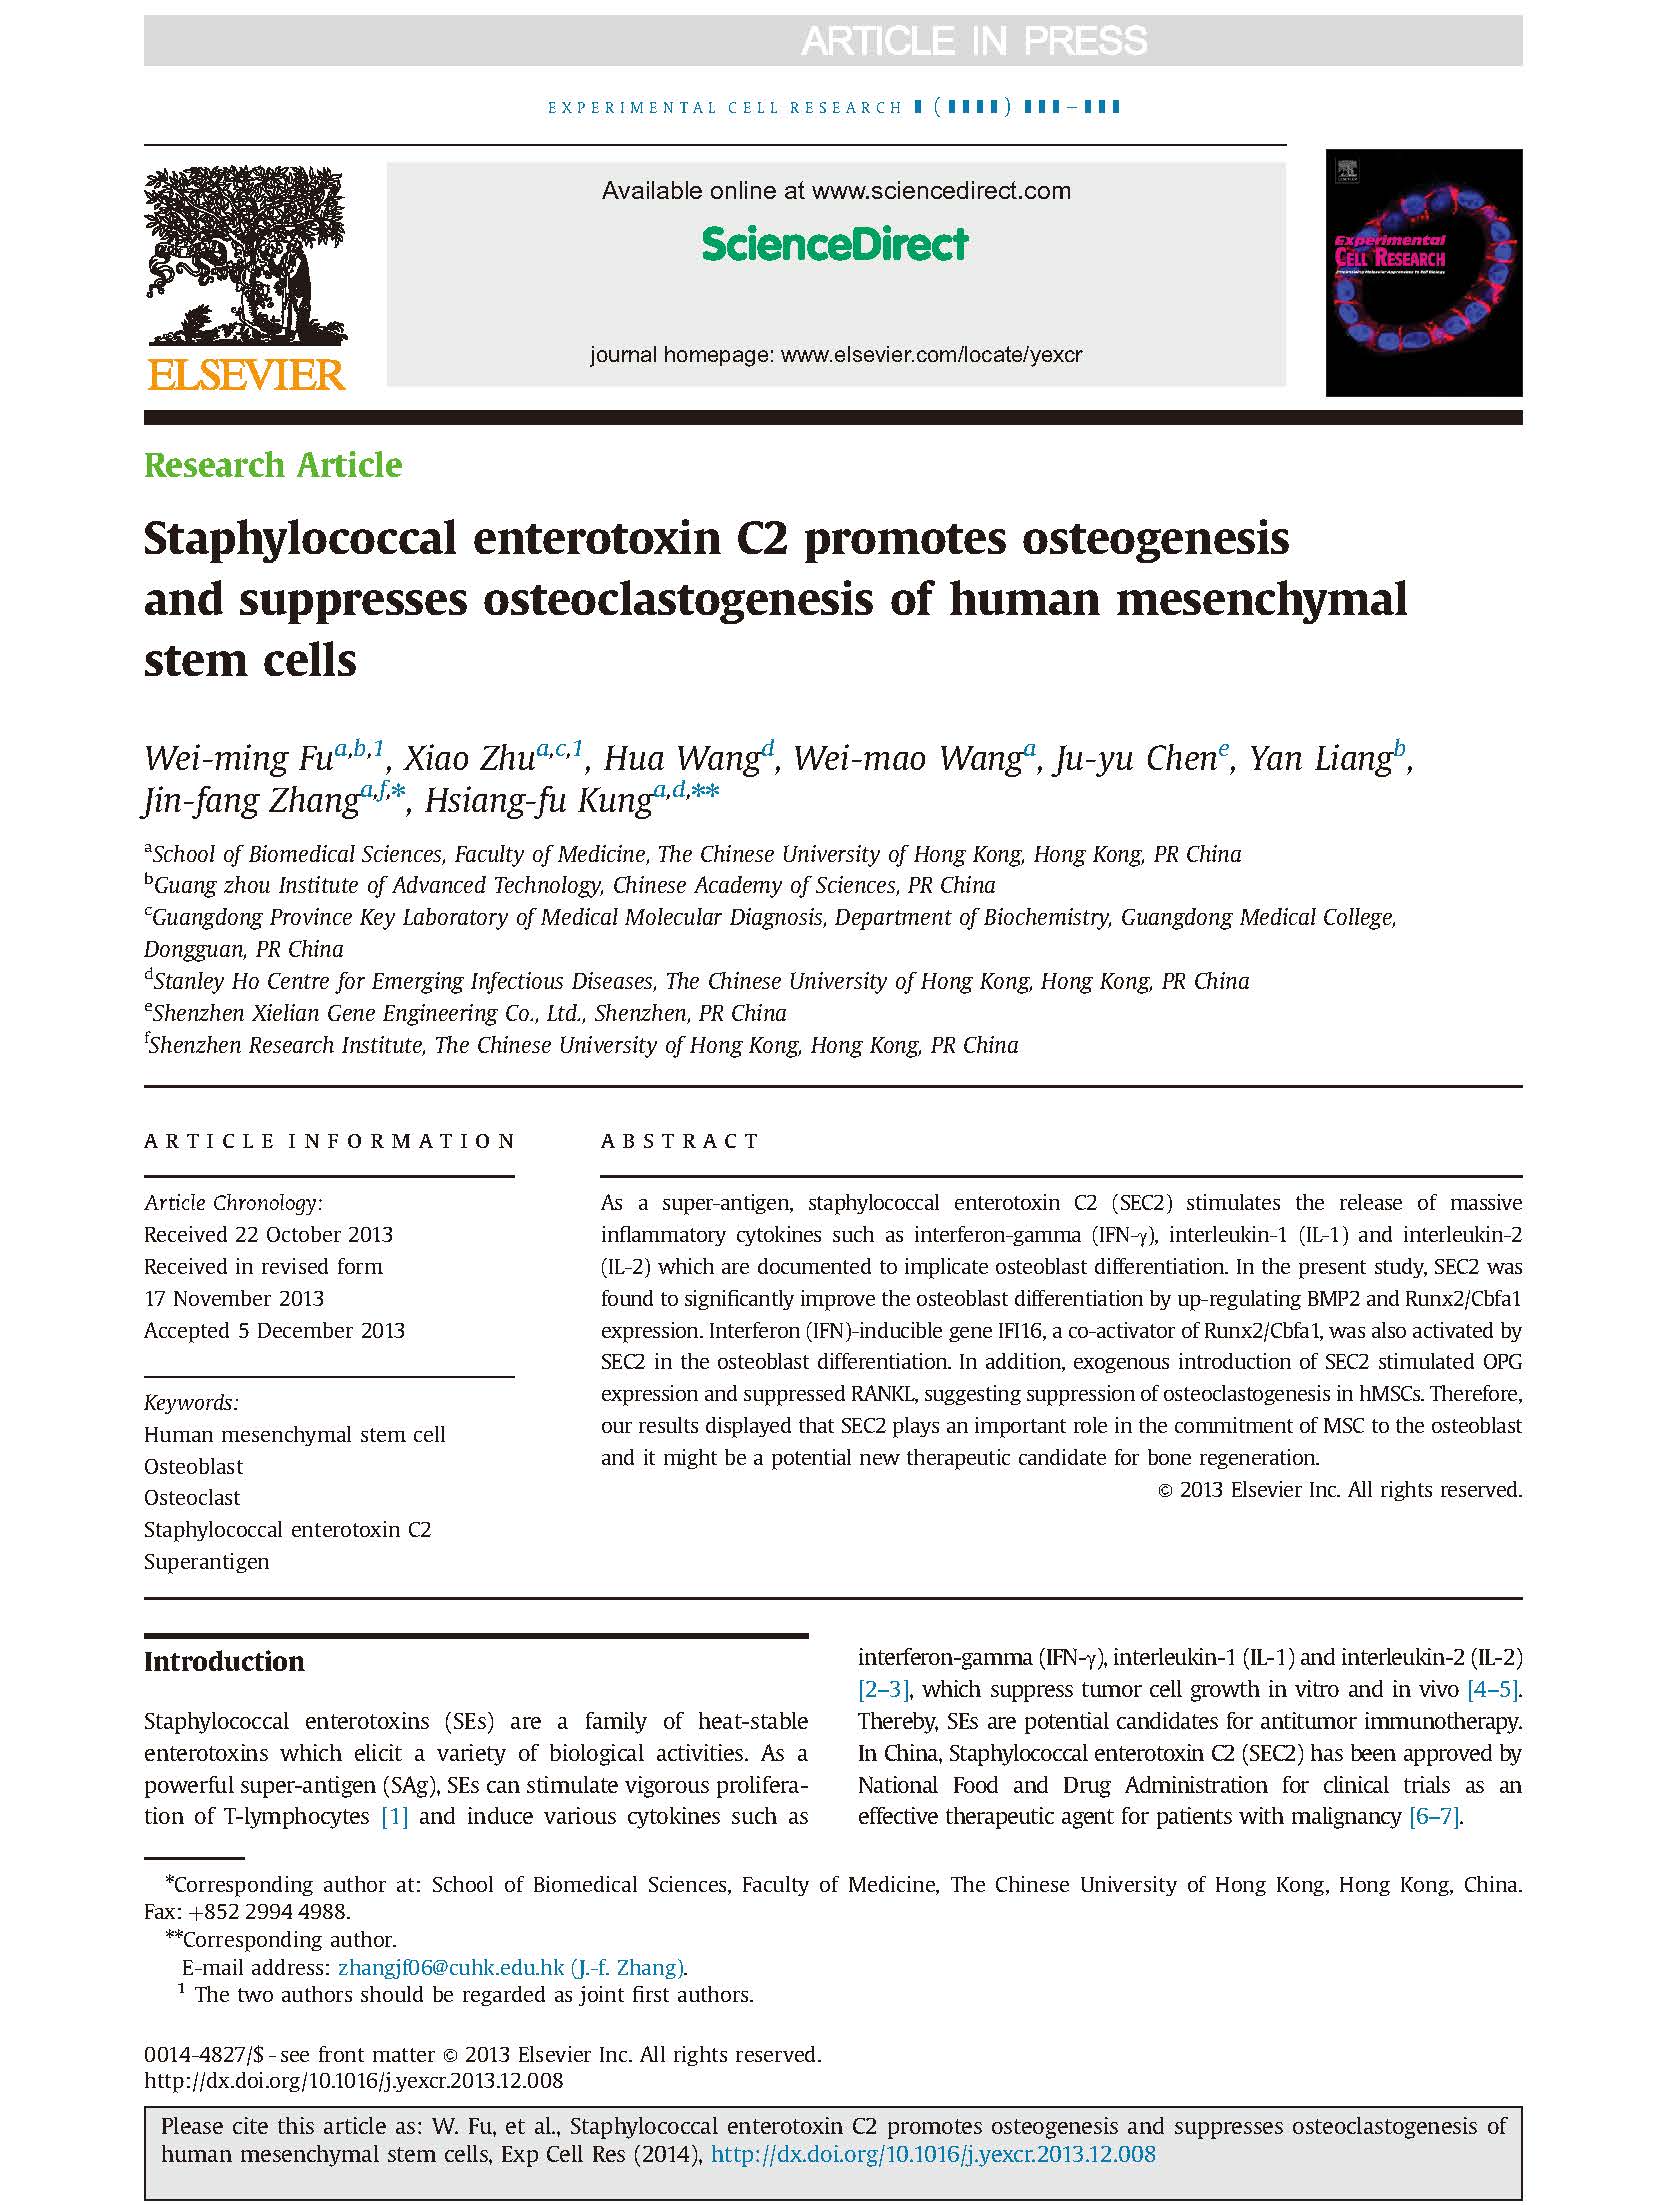 StaphylococcalenterotoxinC2promotesosteogenesis and suppress